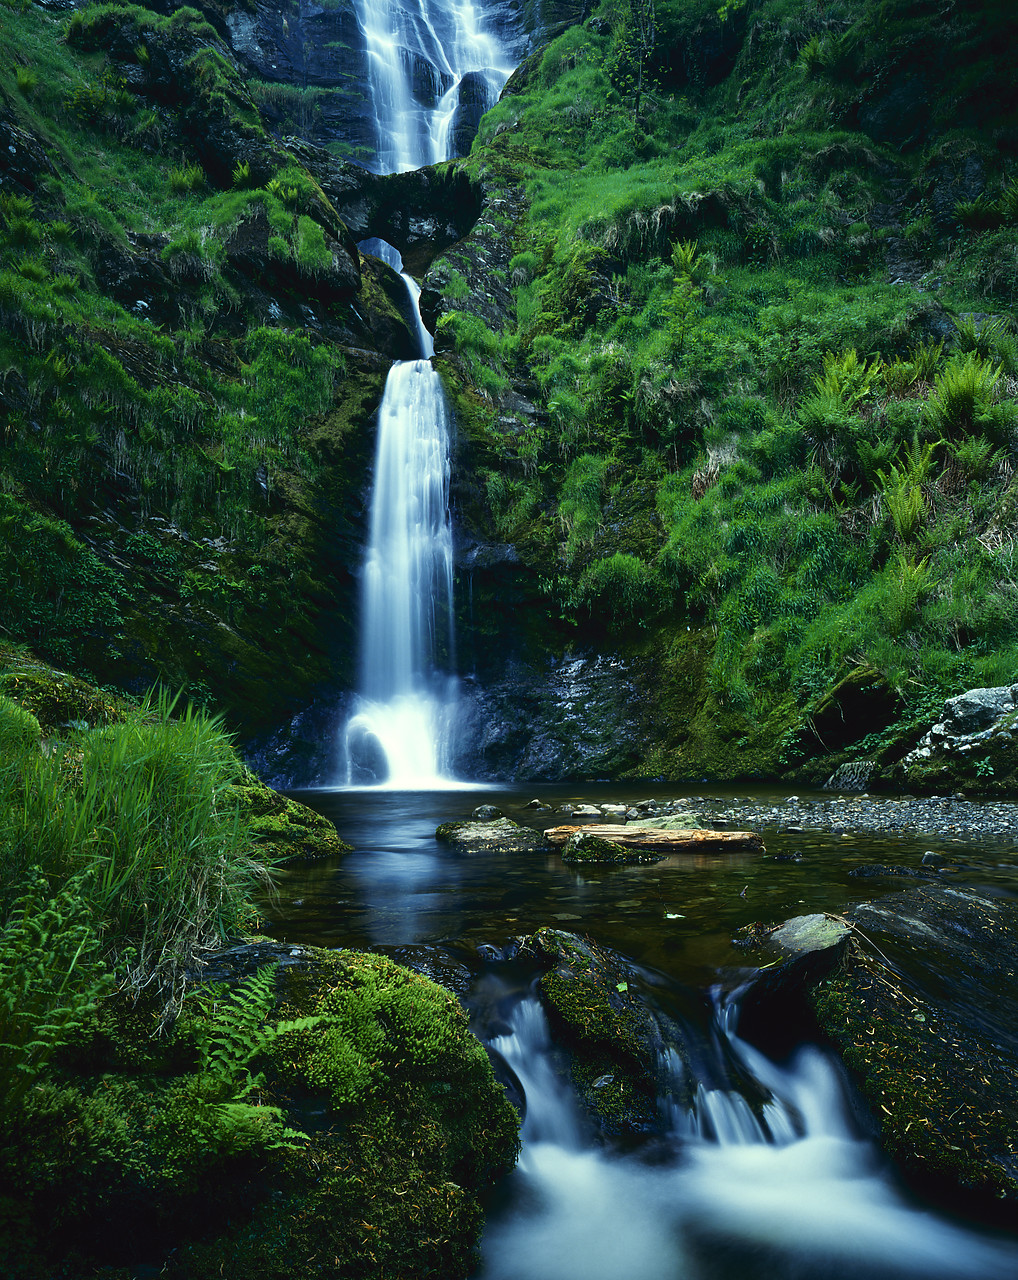 #881361-1 - Lower Pistyll Rhaedr Waterfall, Powys, Wales